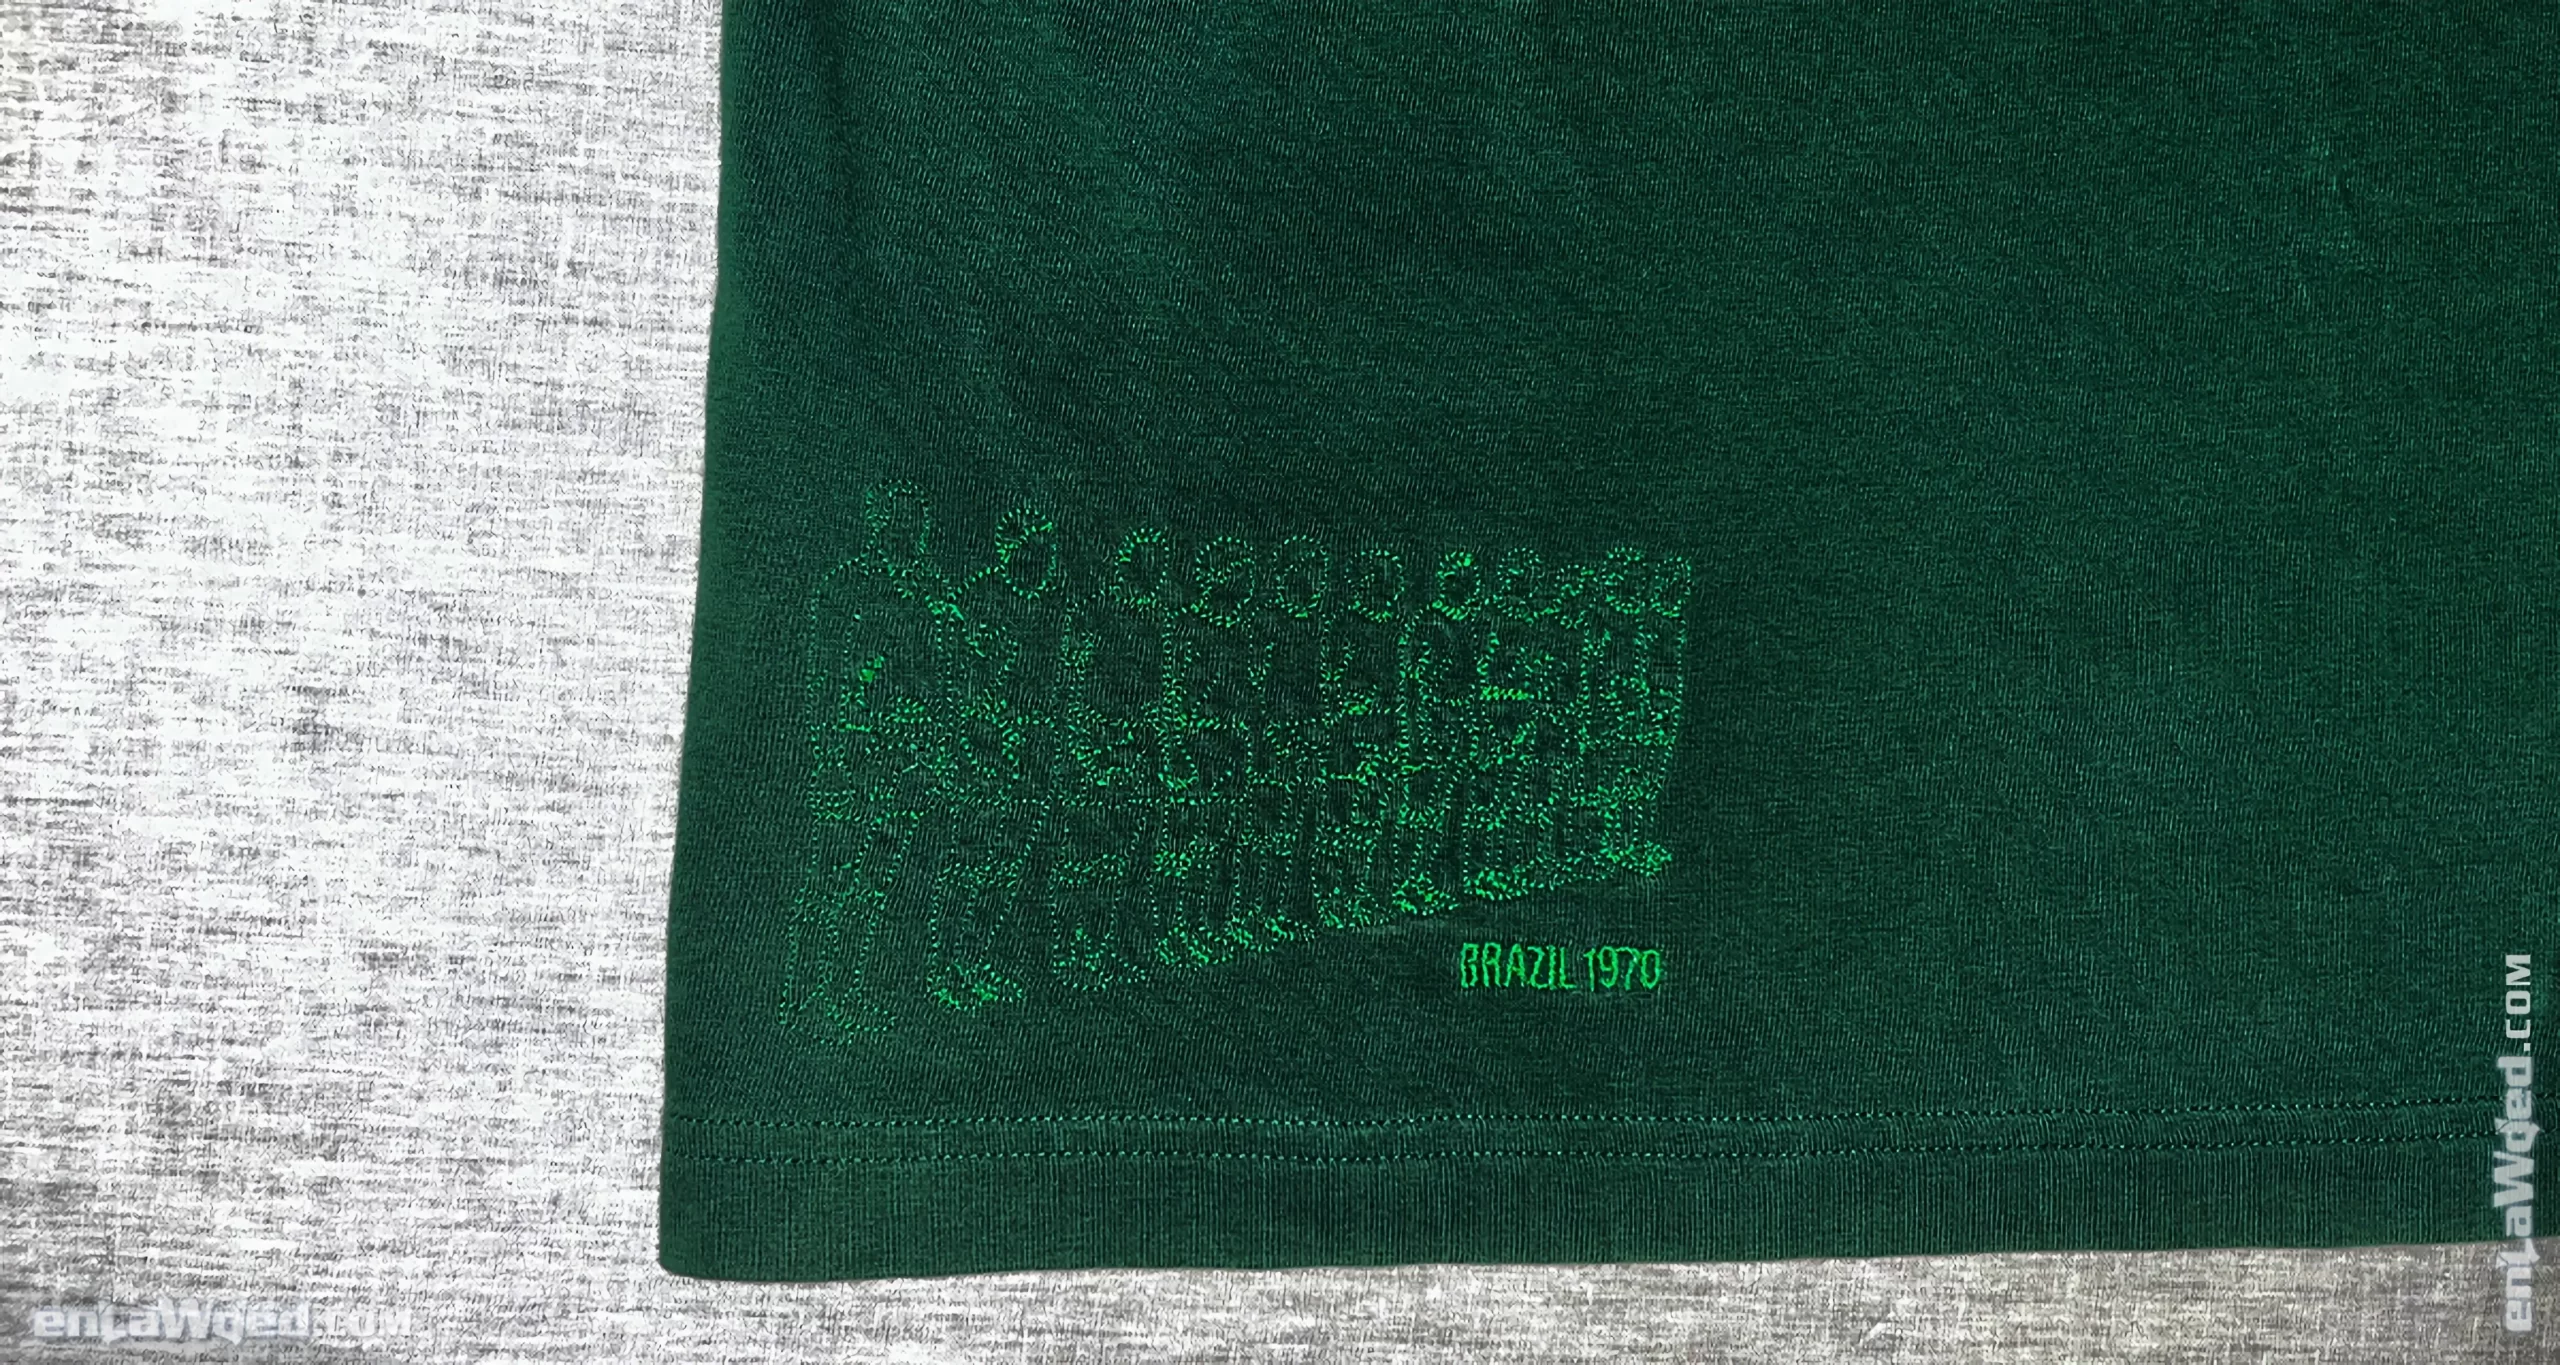 Men’s 2006 Brasil ’70 Green T-Shirt by Adidas Originals: Direct (EnLawded.com file #lp1me486126155a44b4domdd)